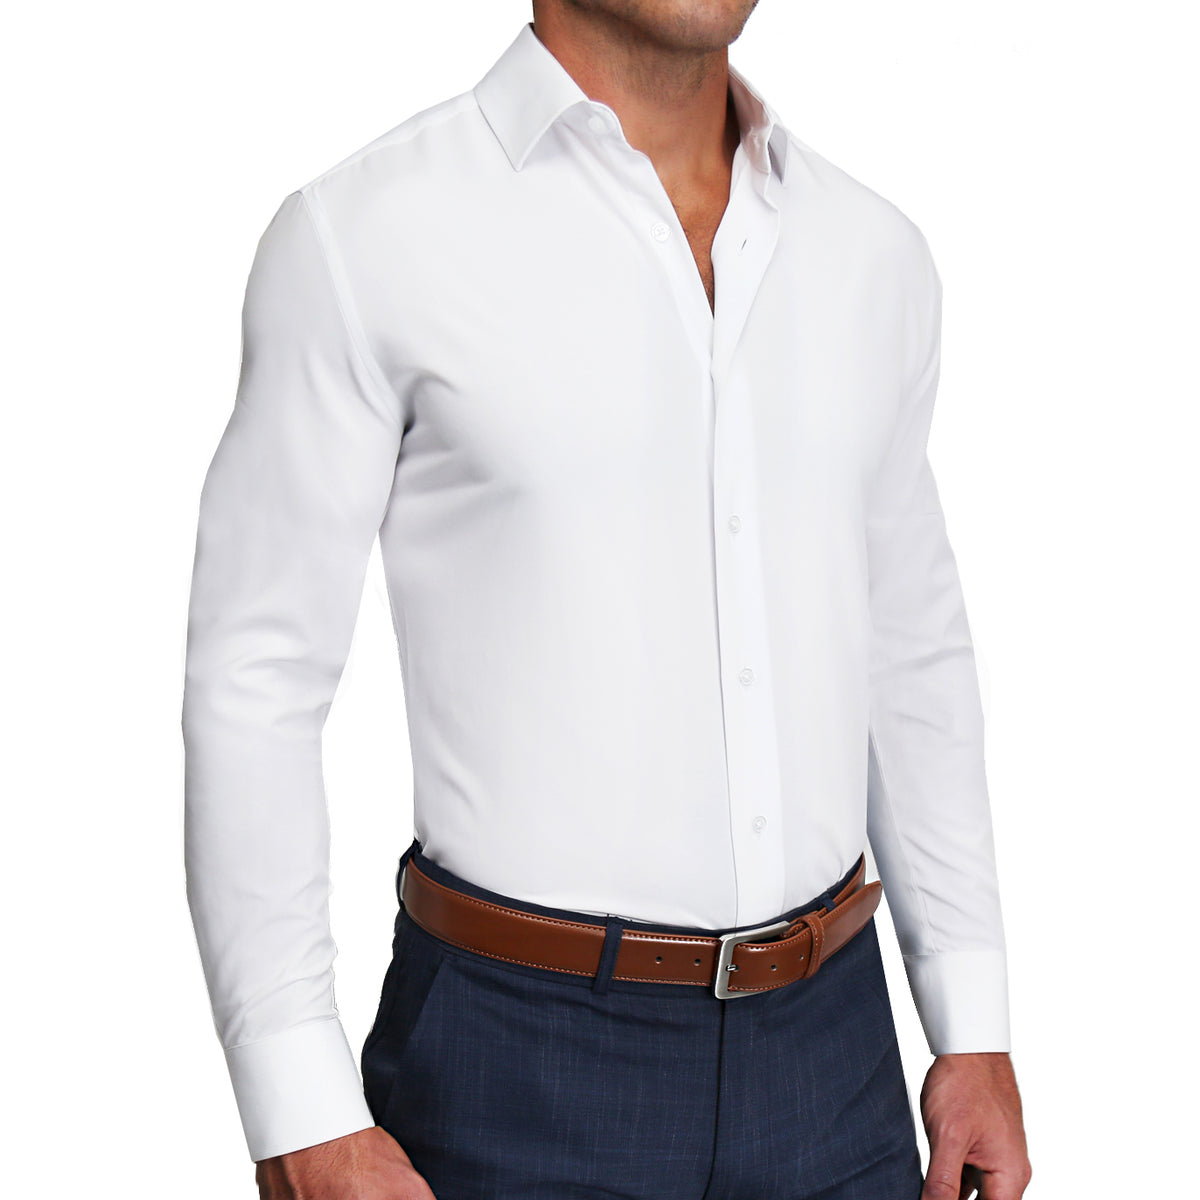 Men's White Dress Shirt, Men's Button Downs